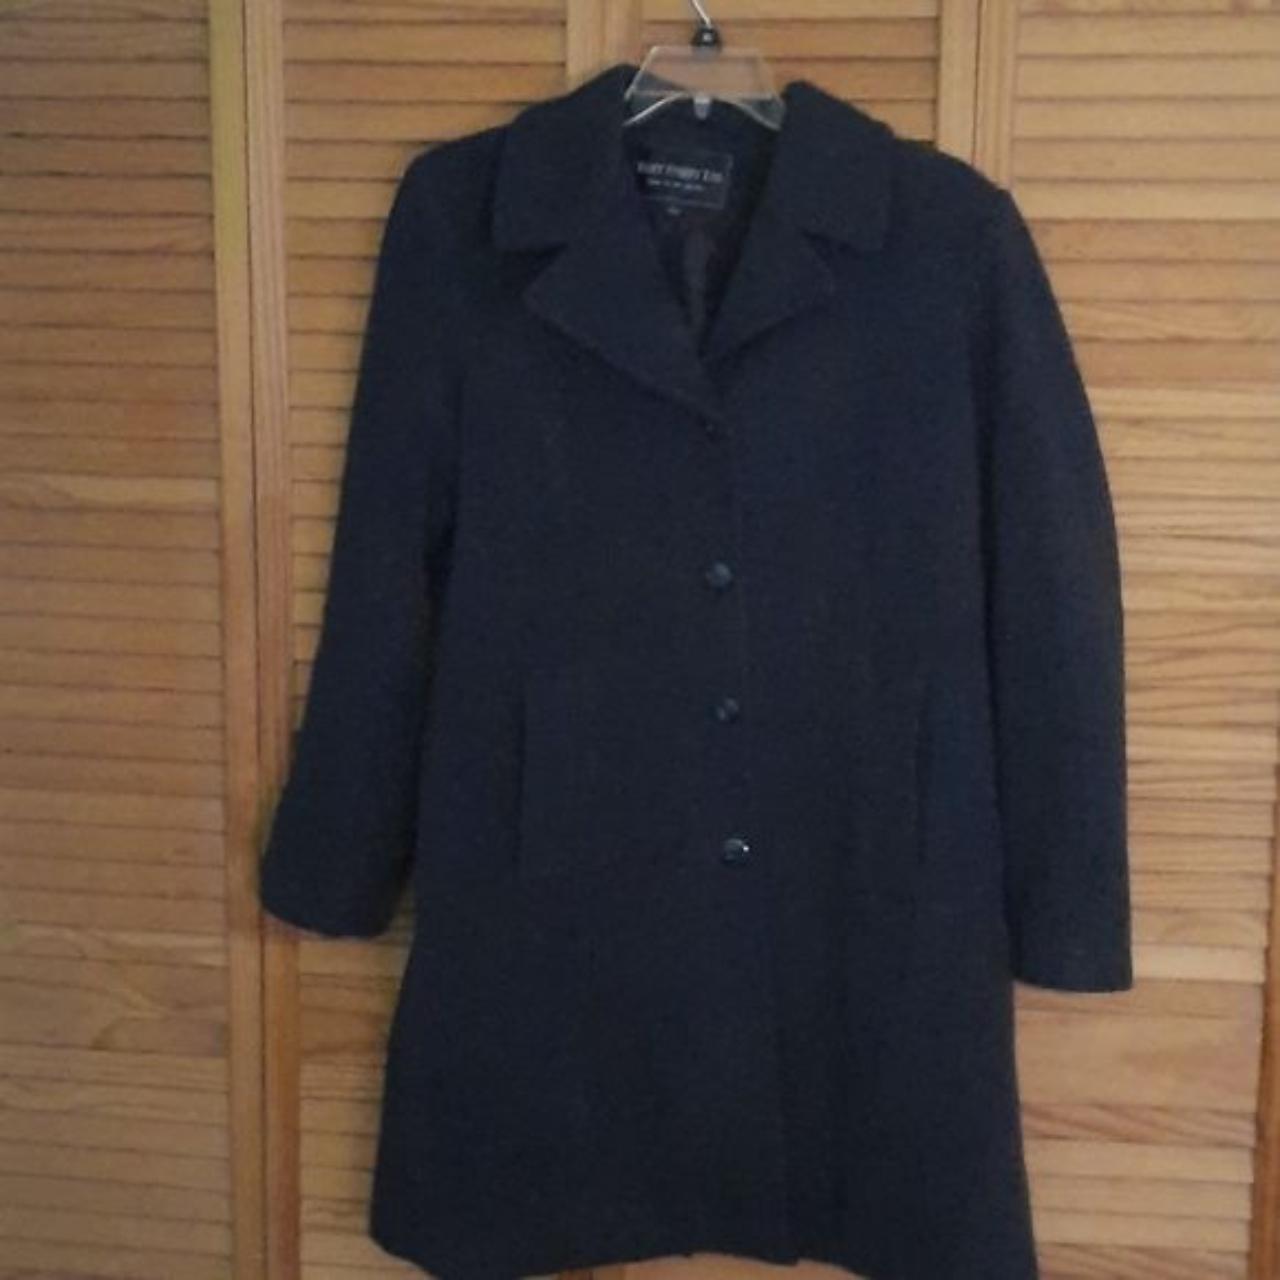 Fleet Street LTD wool coat jacket. 4 button up coat.... - Depop